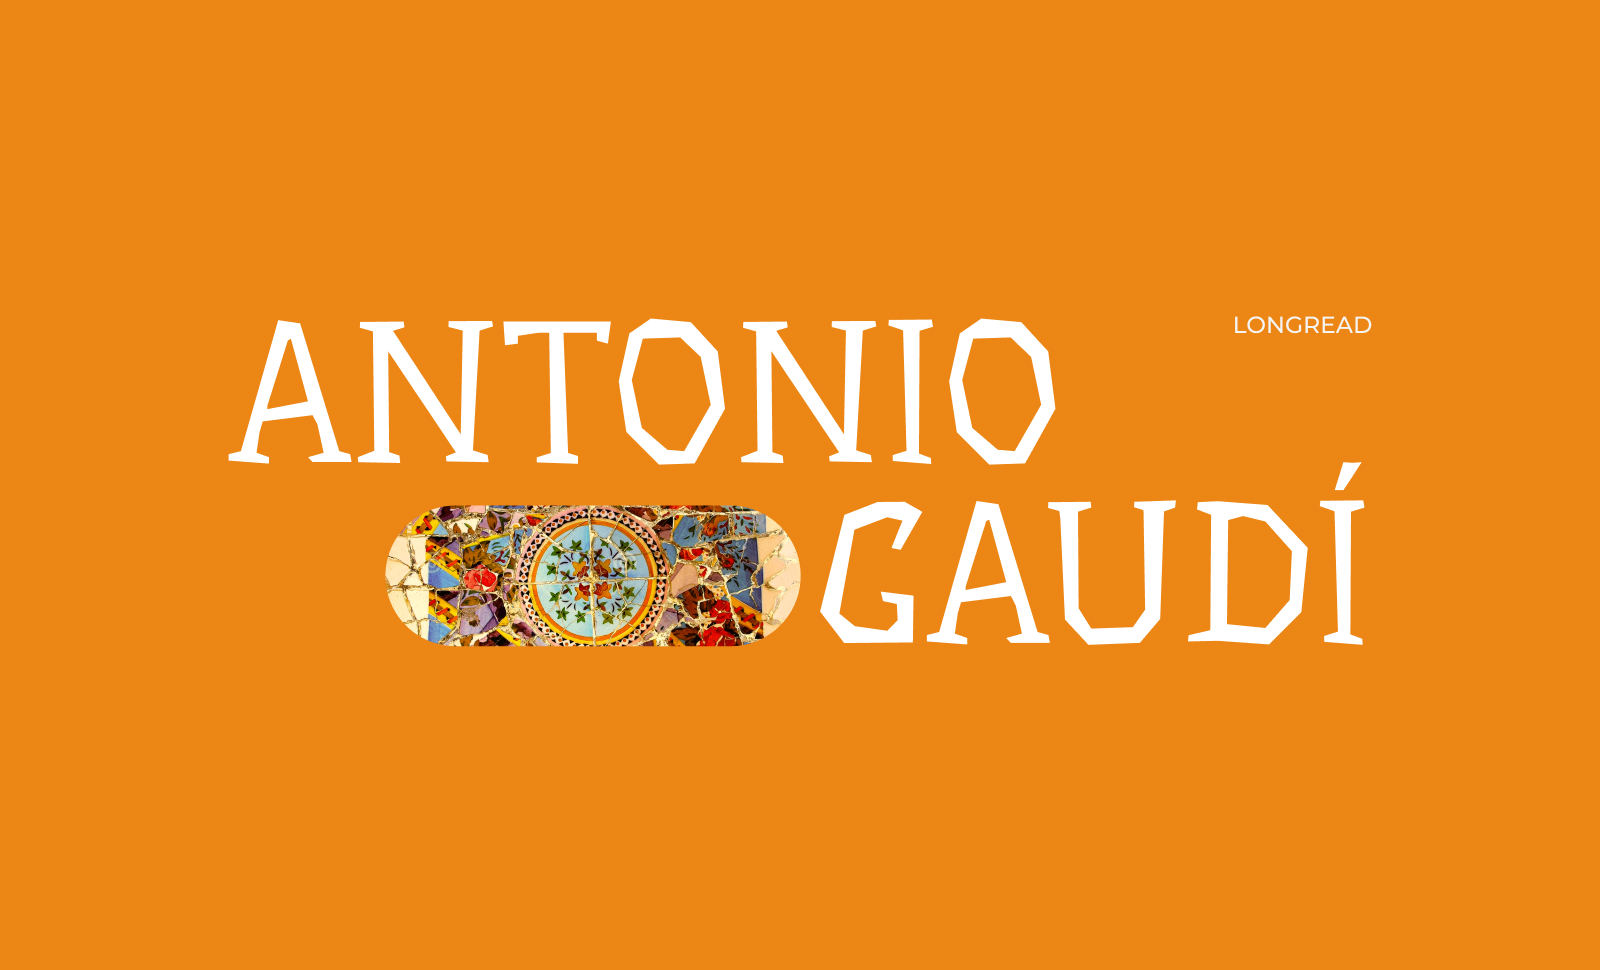 Longread about Antoni Gaudi